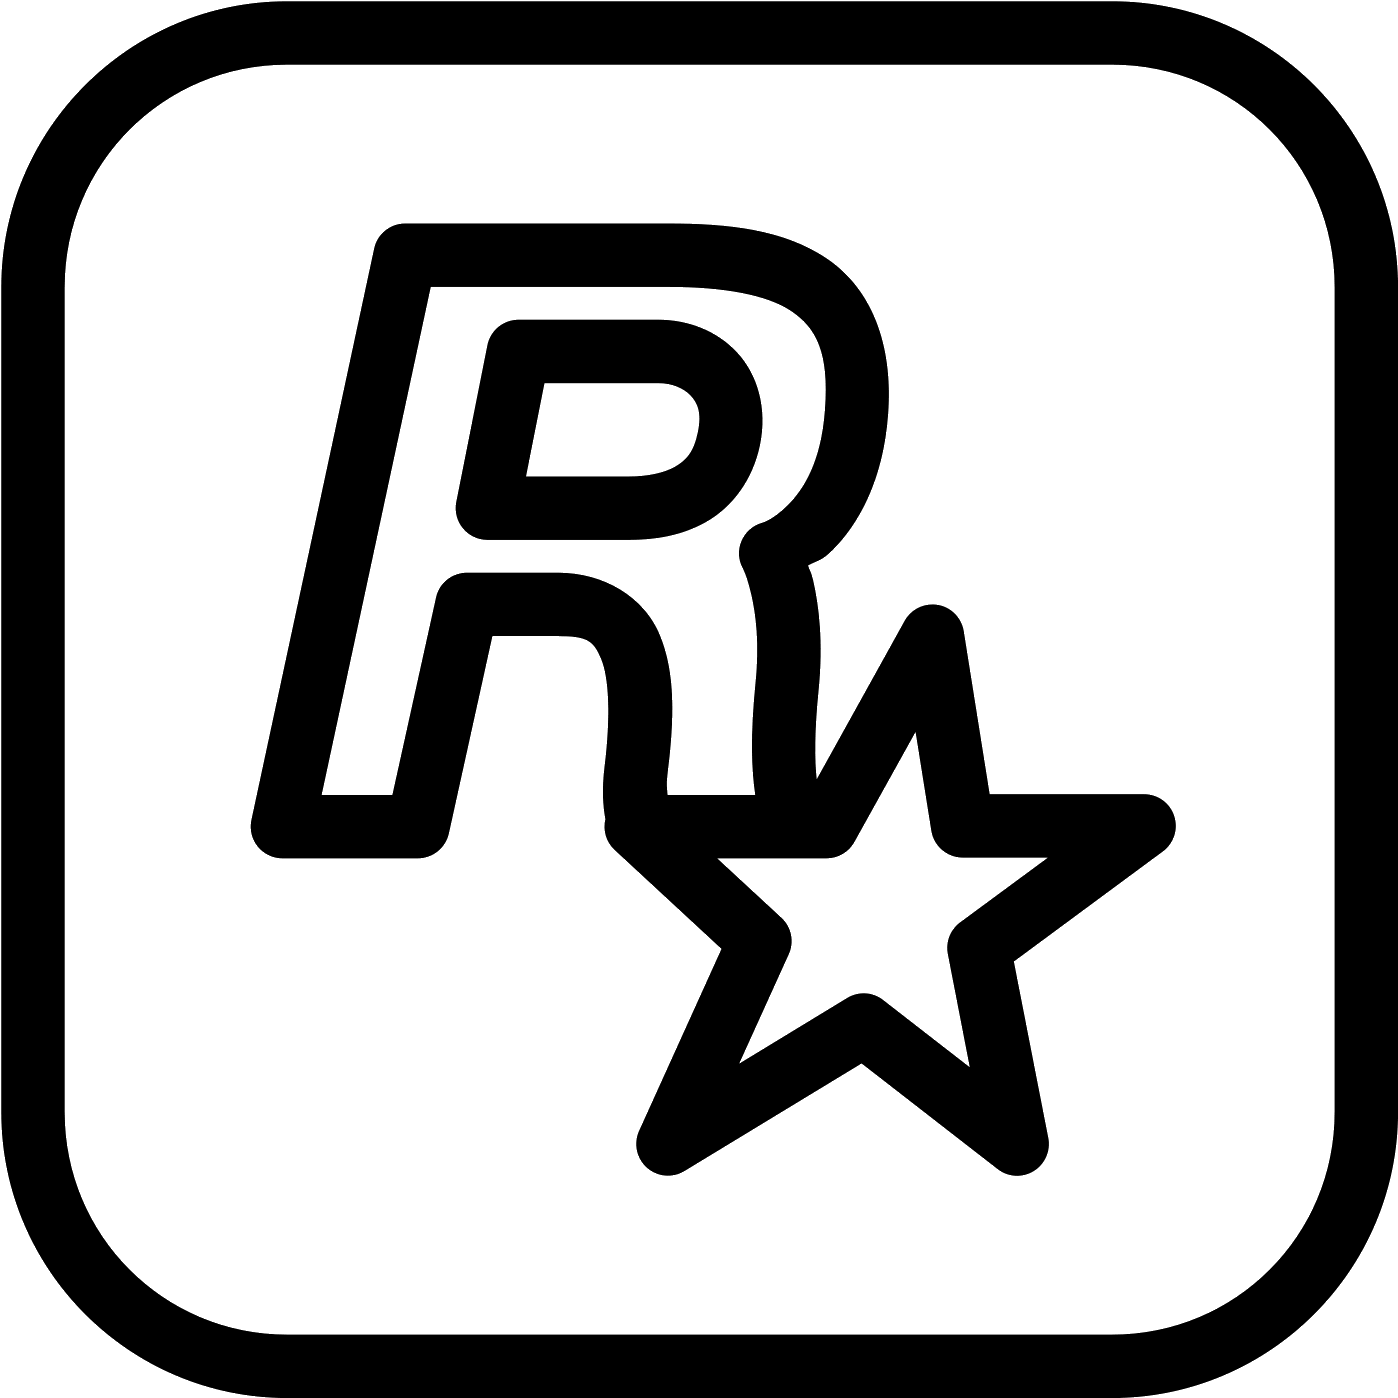 Rockstar Games Logo - Pluspng